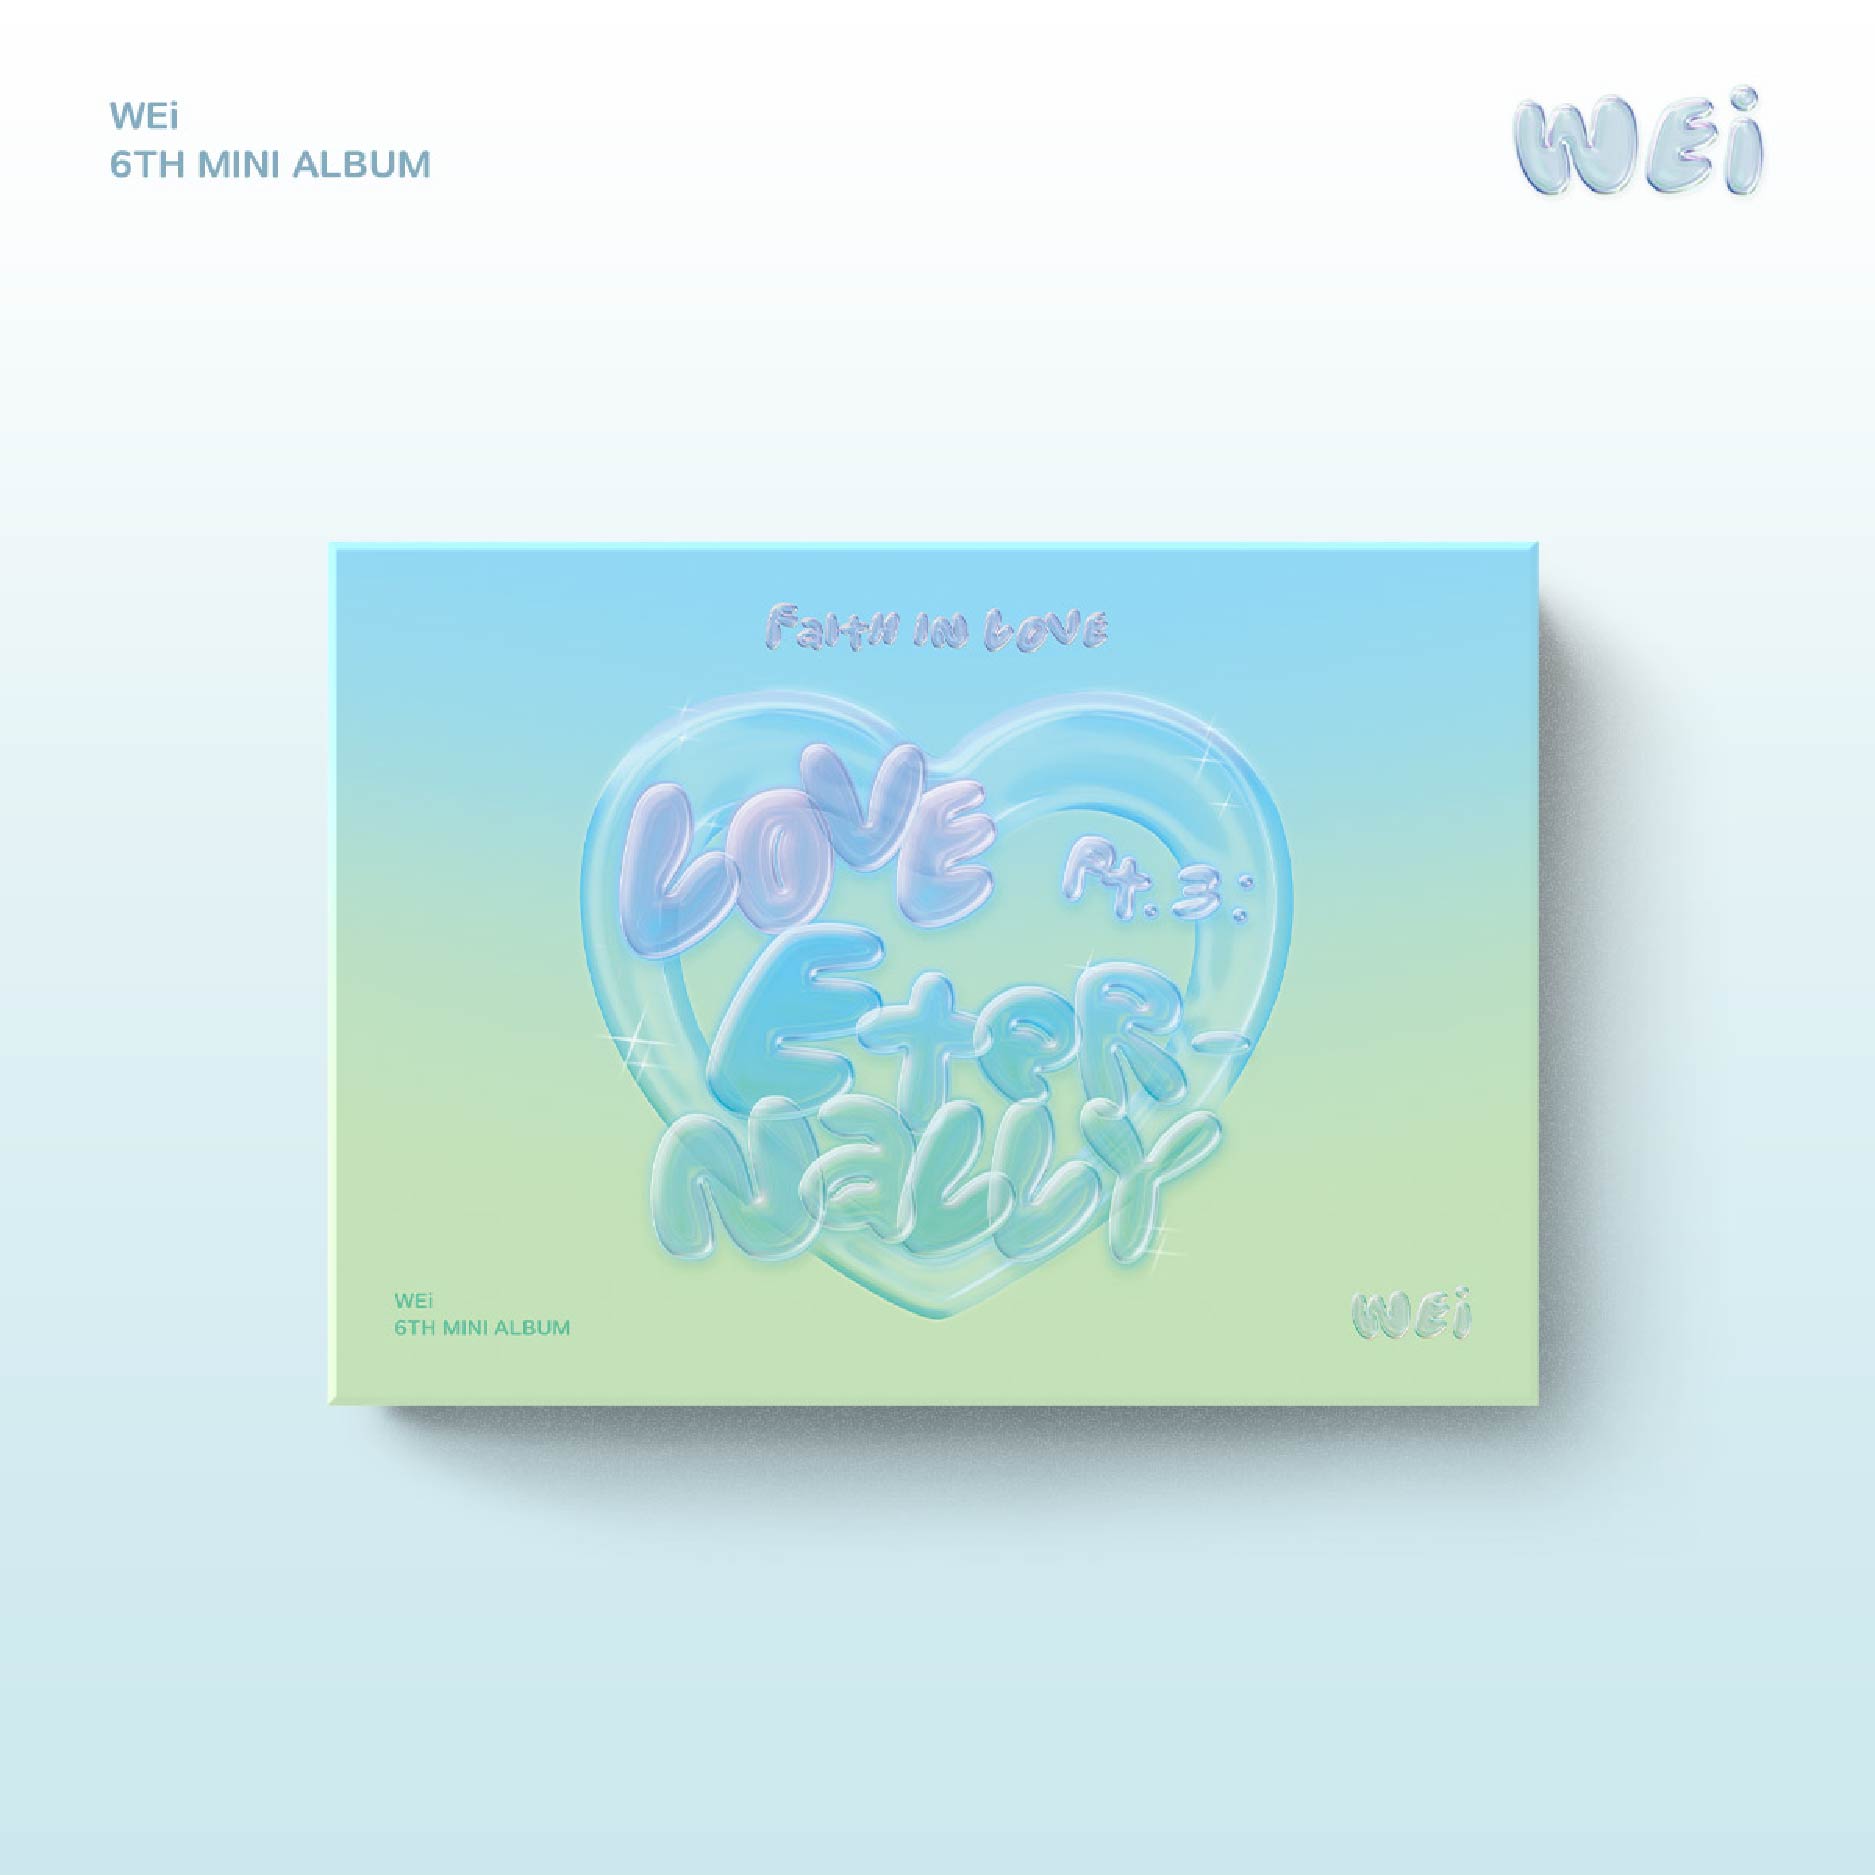 [全款 裸专]WEi - 迷你6辑 [Love Pt.3 : Eternally] (PocaAlbum Ver.) (Faith in love Ver.)_金曜汉吧 KimYoHanBar